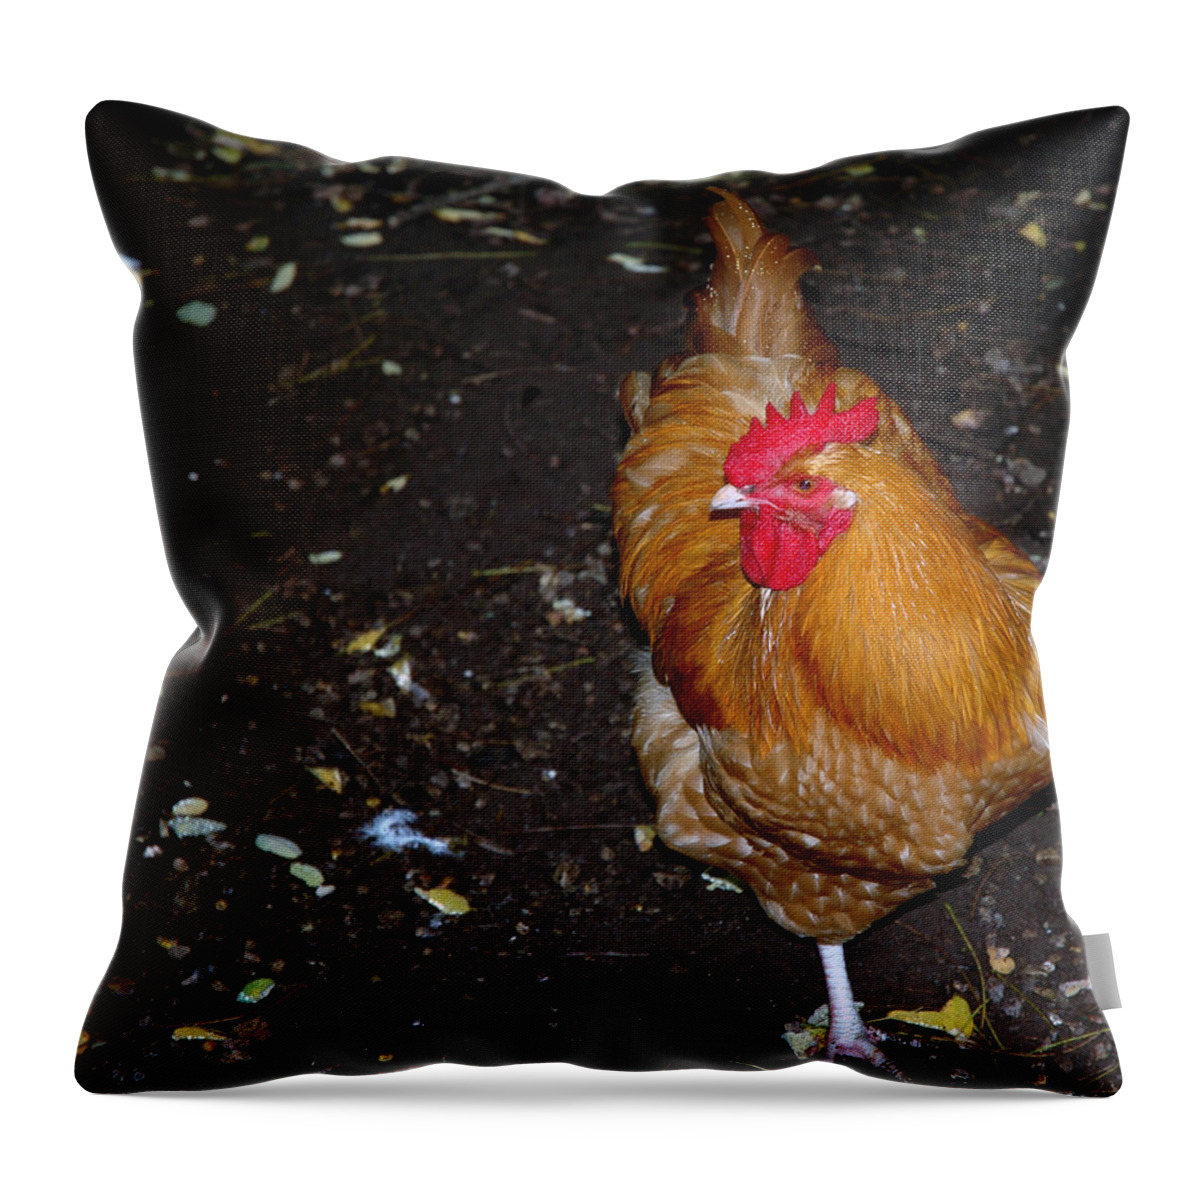 Usa Throw Pillow featuring the photograph Orange Chicken by LeeAnn McLaneGoetz McLaneGoetzStudioLLCcom